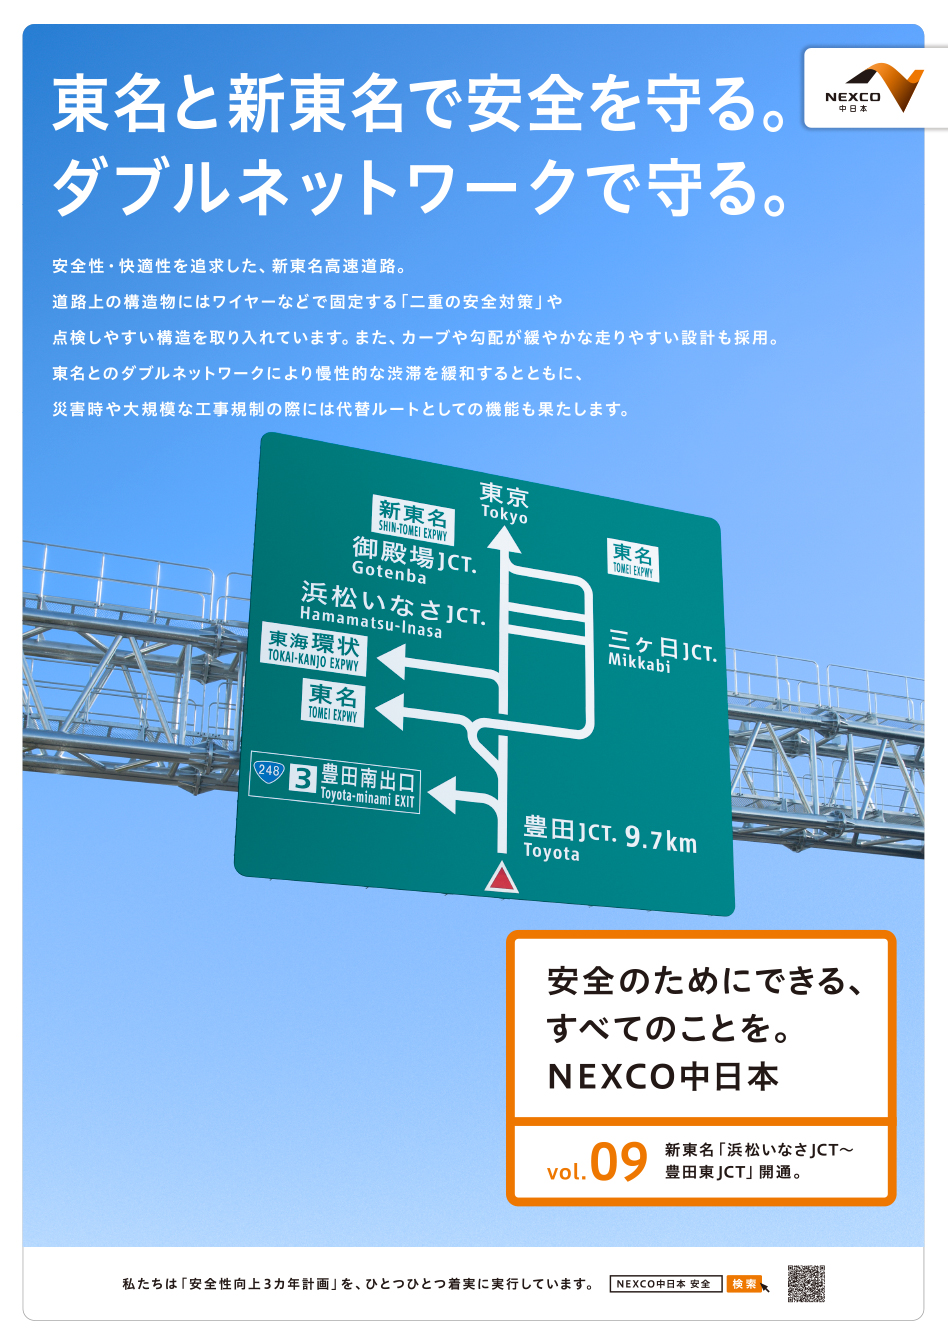 Vol 09 新東名 浜松いなさjct 豊田東jct 開通 安全性向上3カ年計画の取組み状況 安全のためにできる すべてのことを Nexco中日本